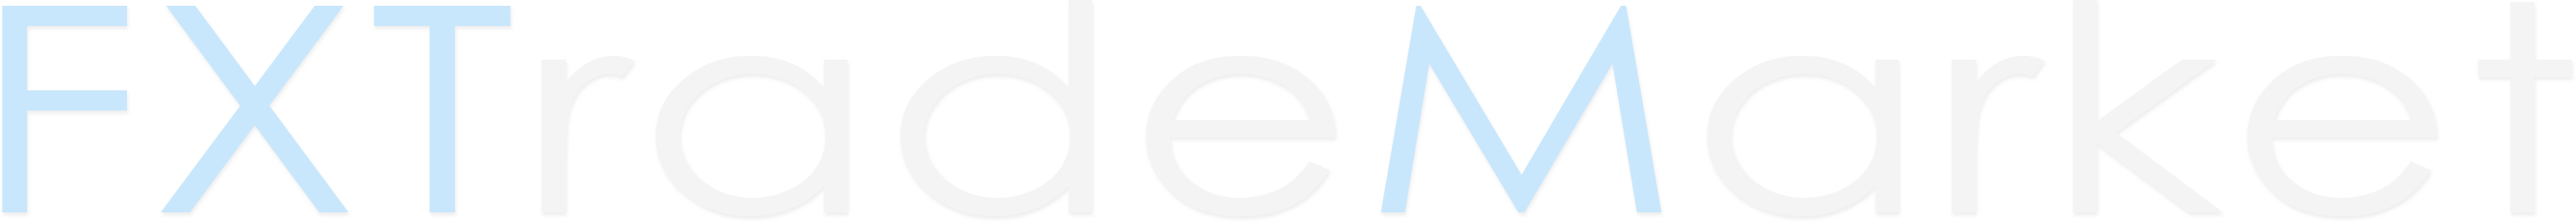 FXTRADEMARKET Logo